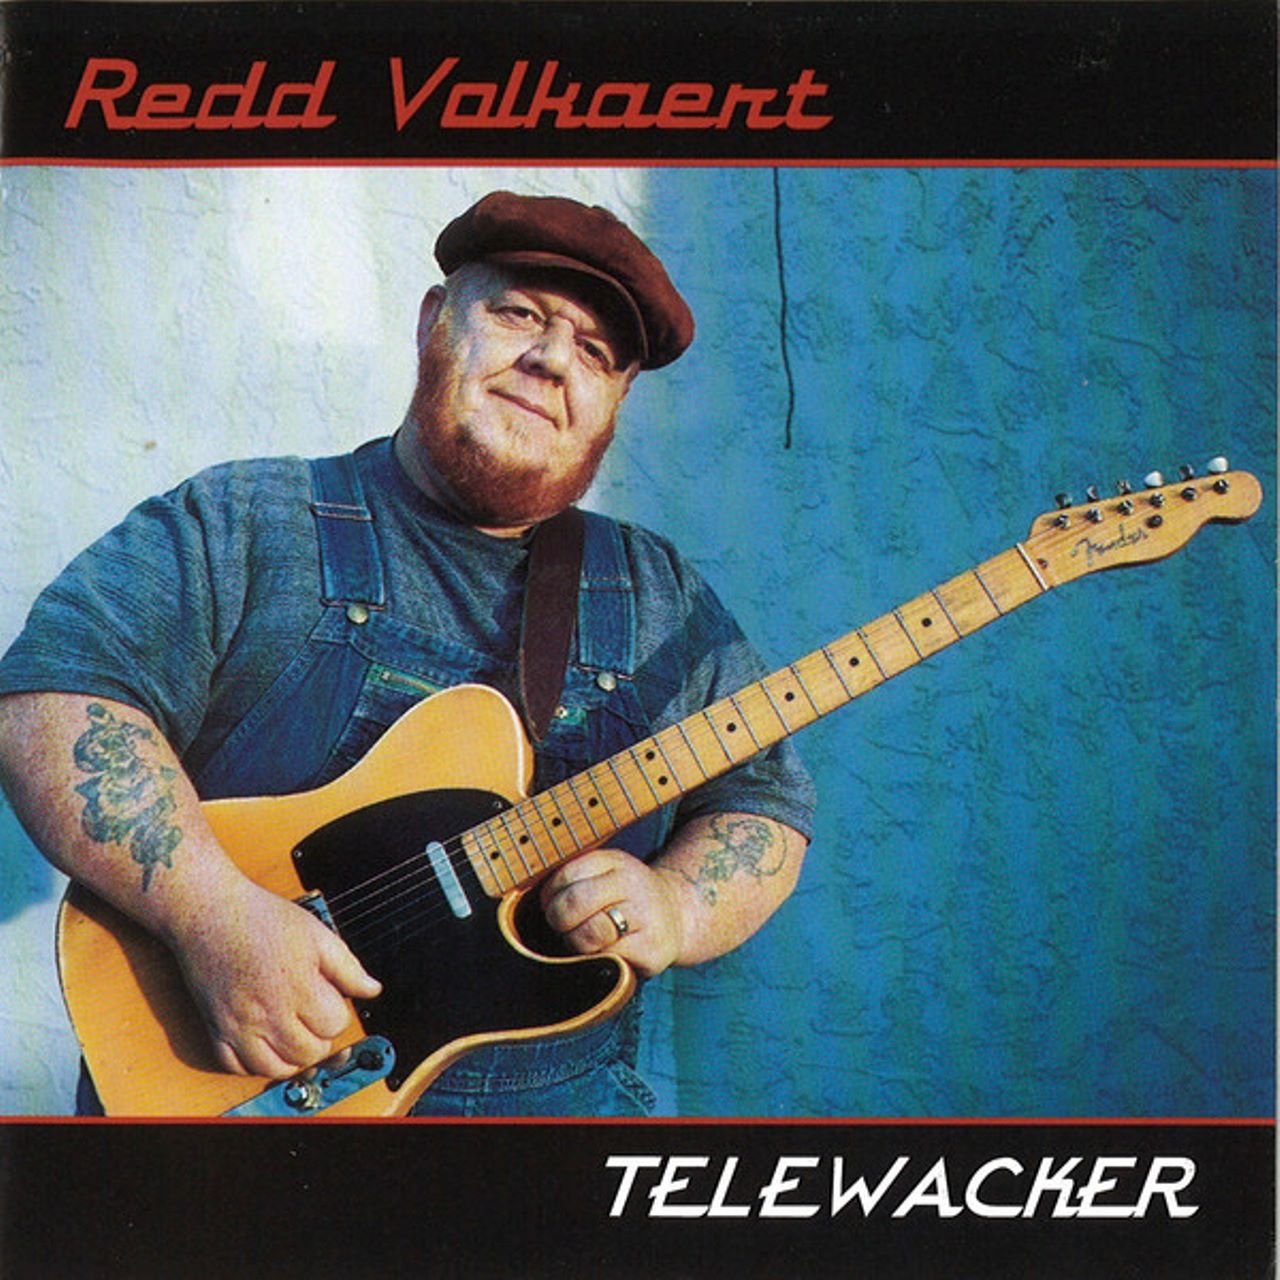 Redd Volkaert - Telewacker cover album